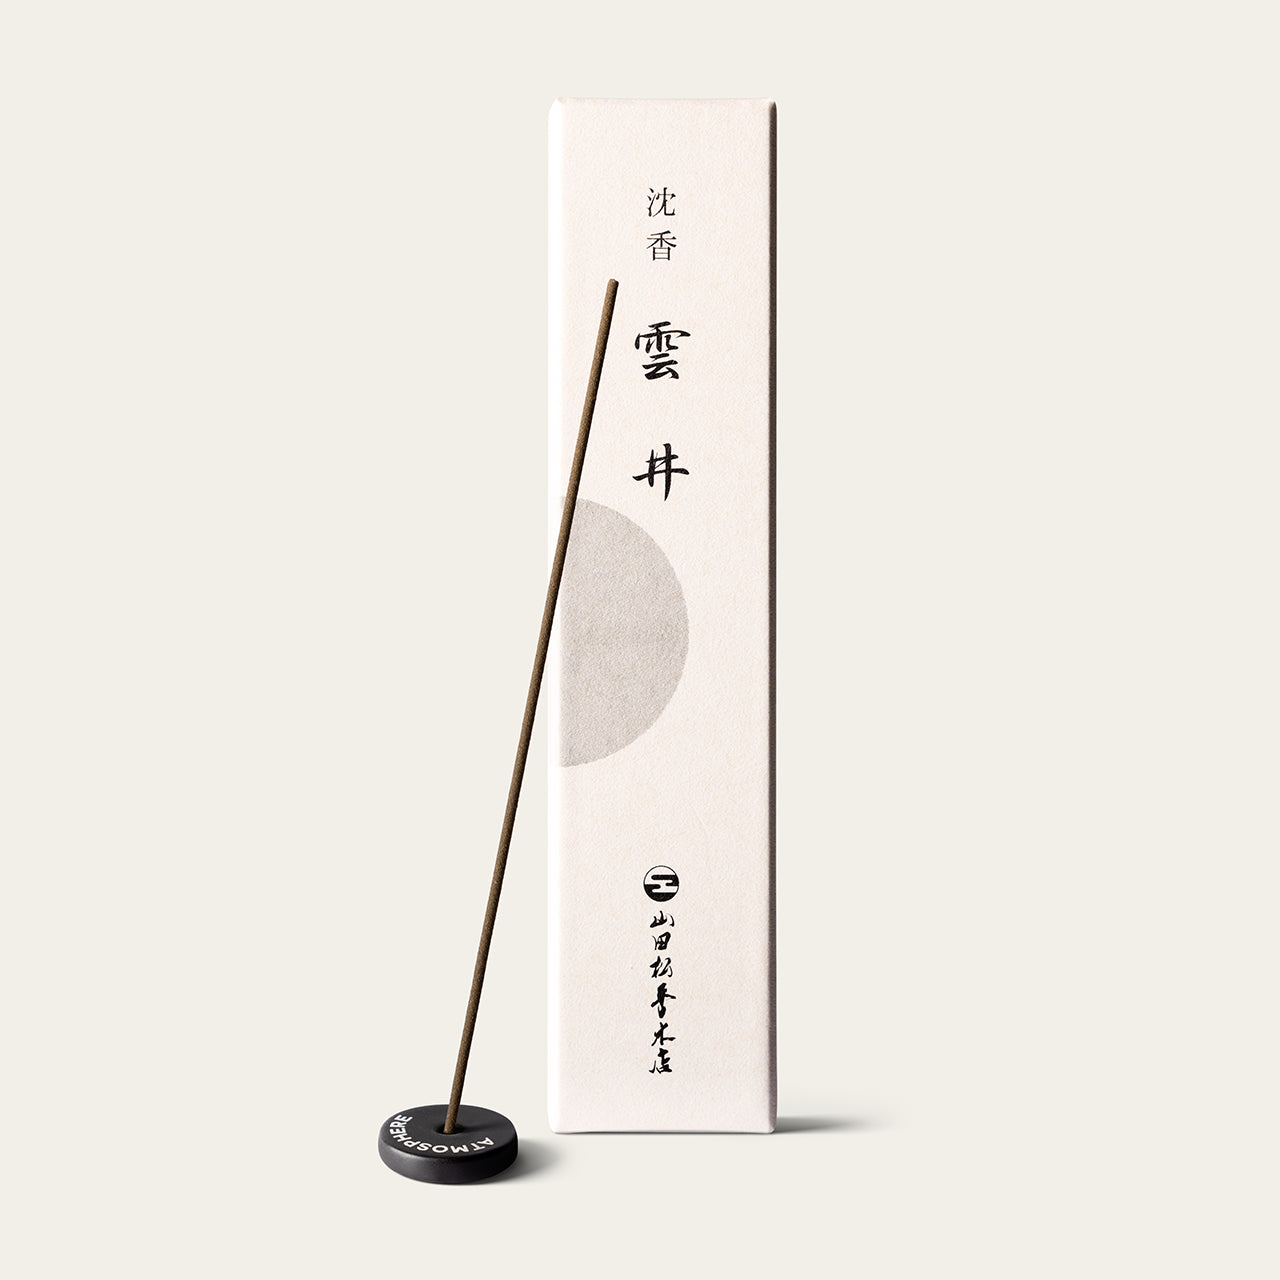 Yamadamatsu Premium Skywell Kumoi Japanese incense sticks (75 sticks) with Atmosphere ceramic incense holder